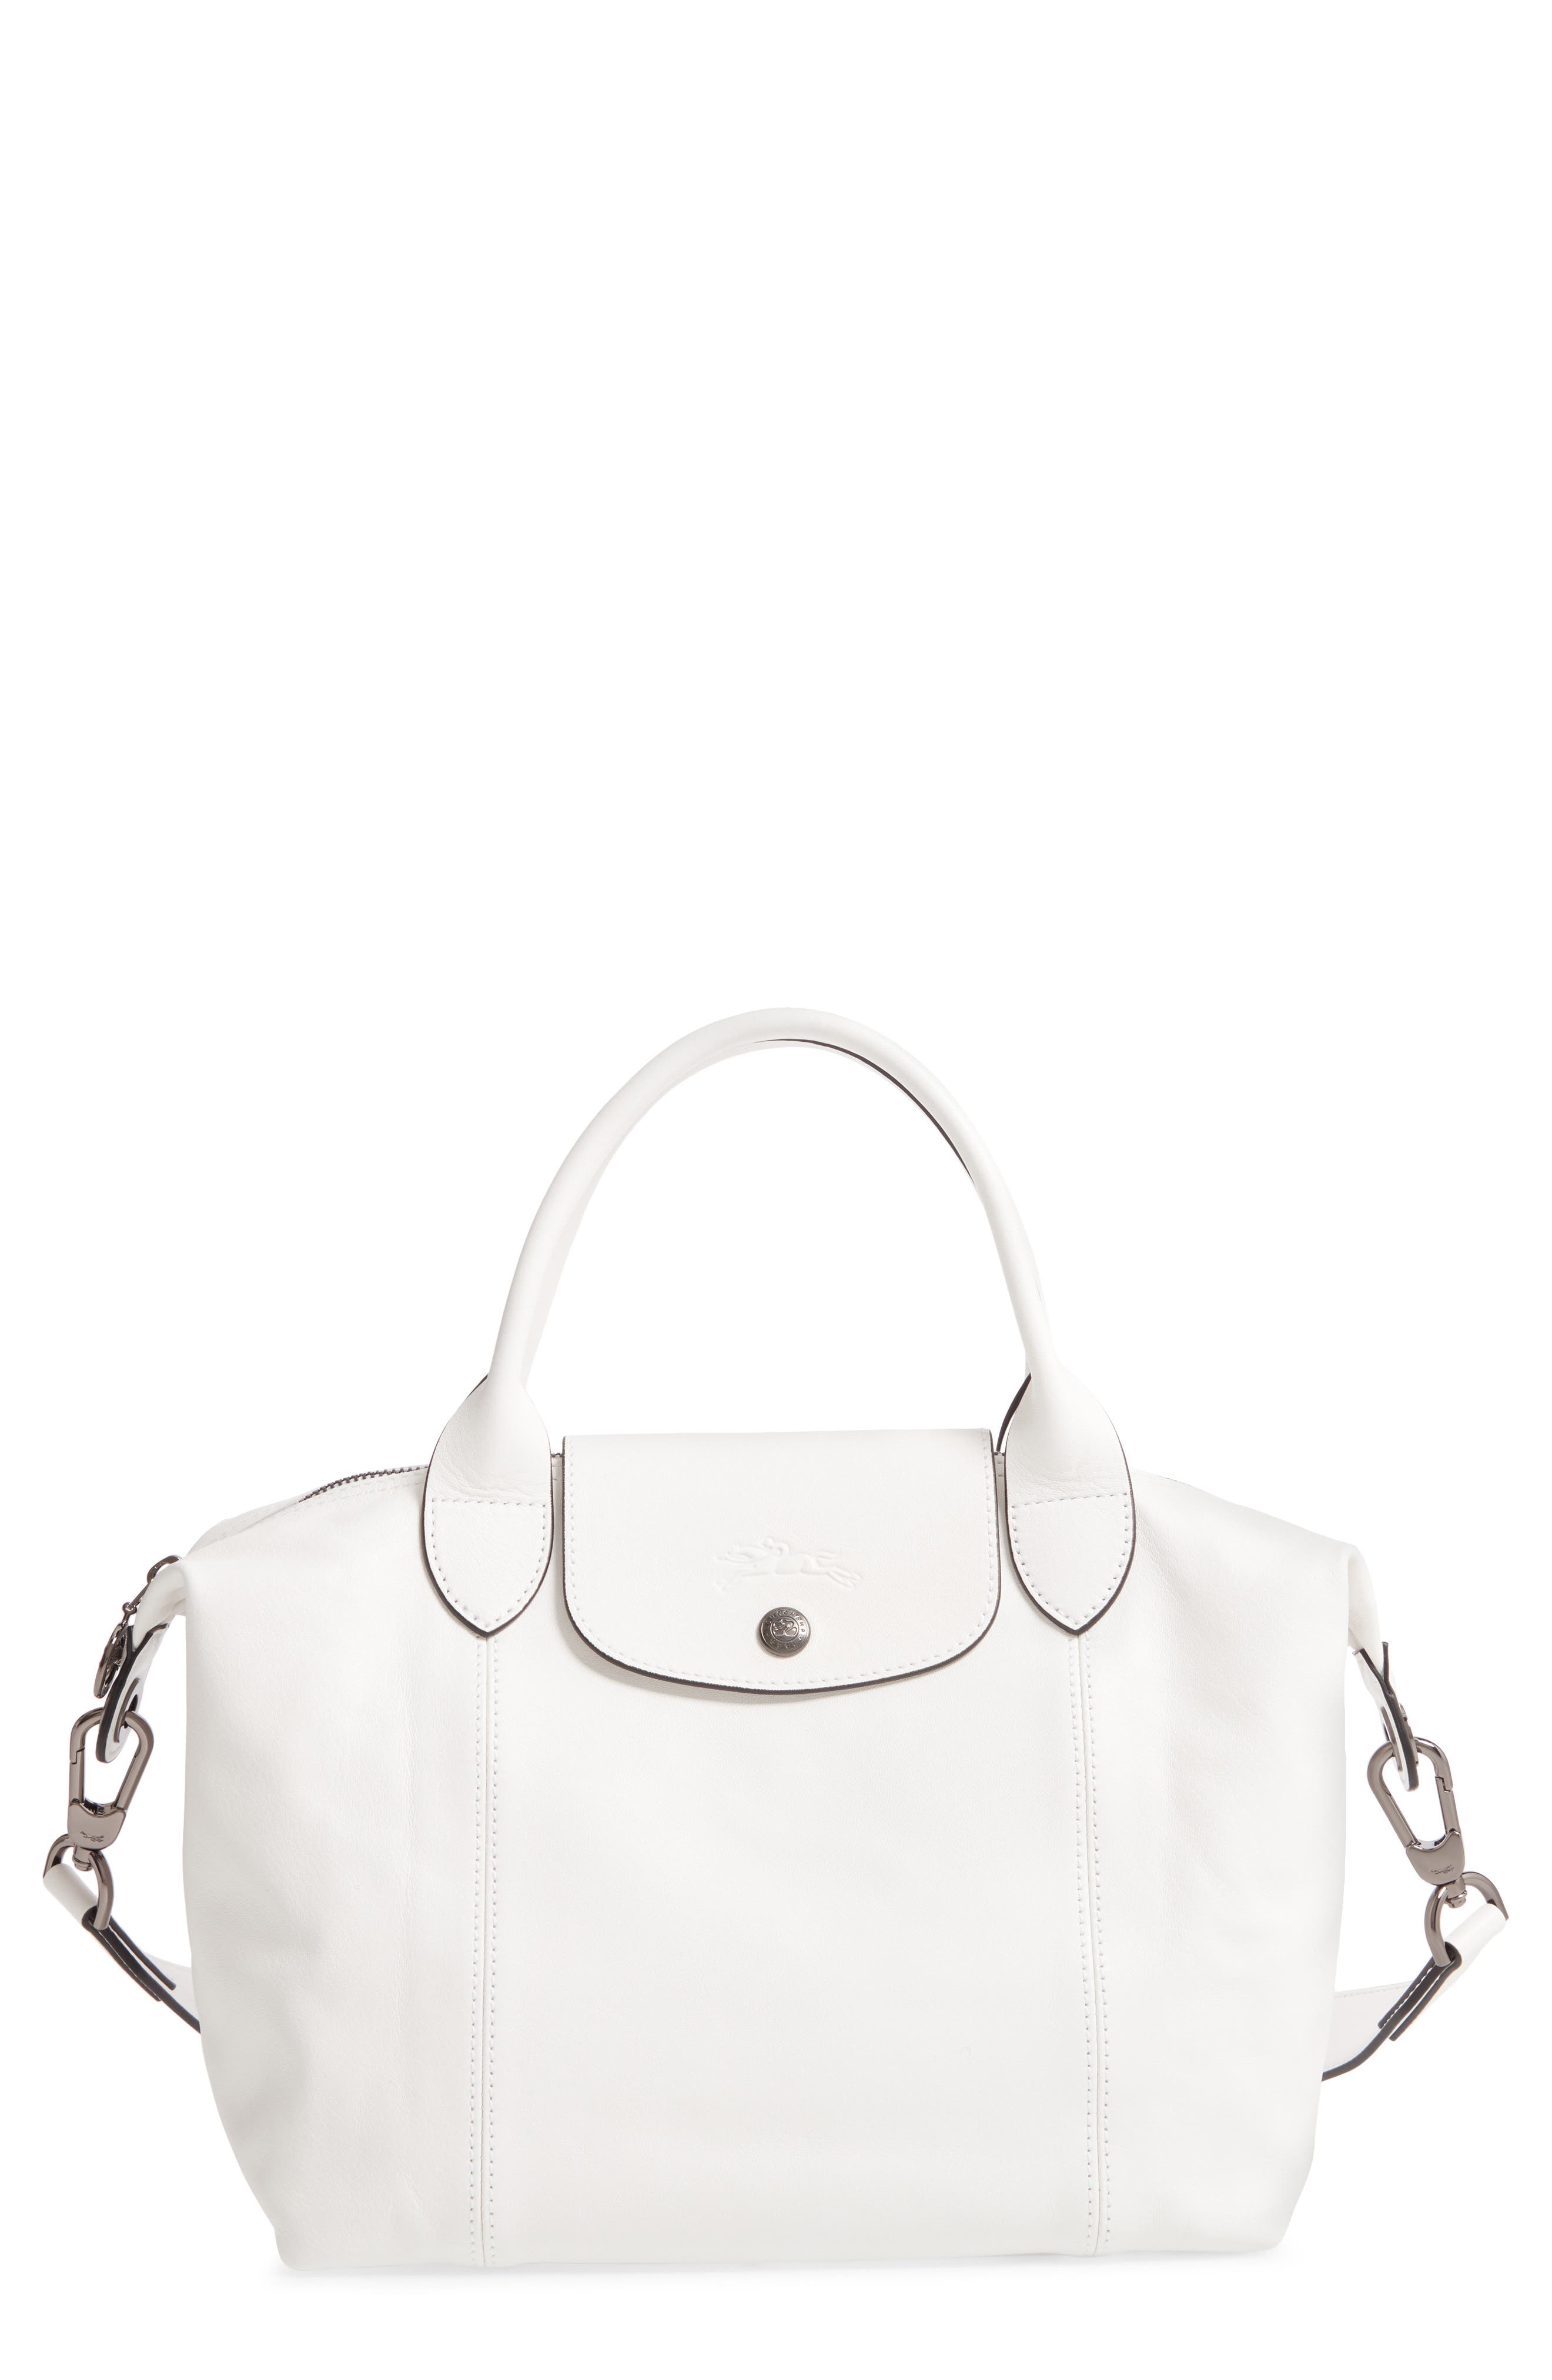 longchamp bag white